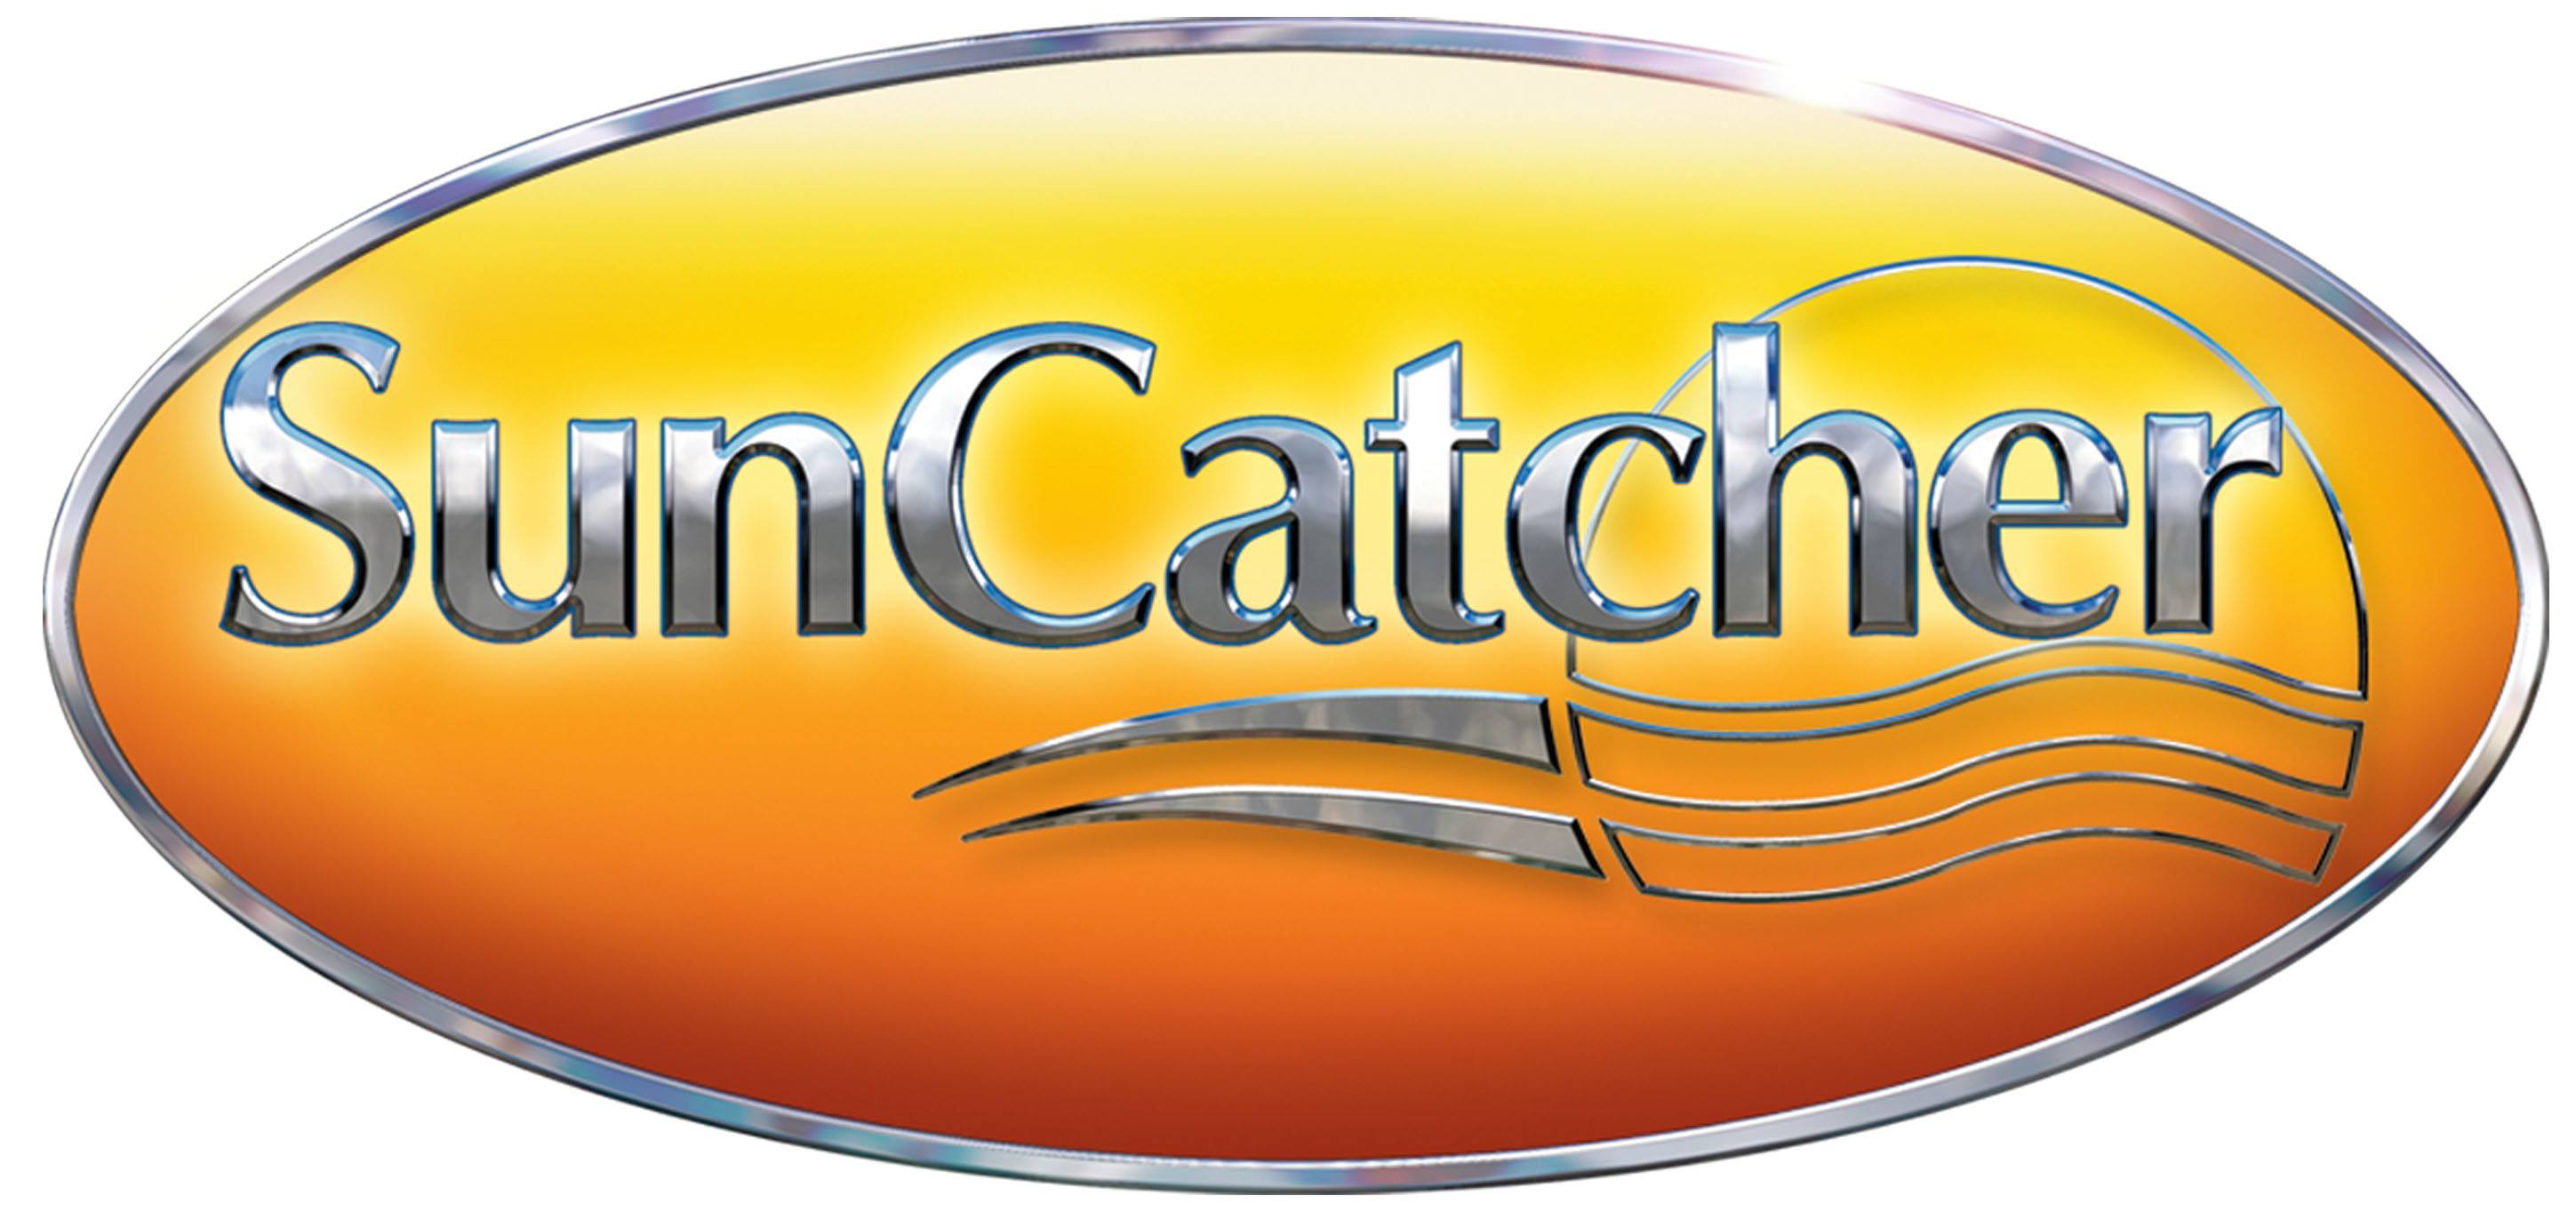 SunCatcher logo